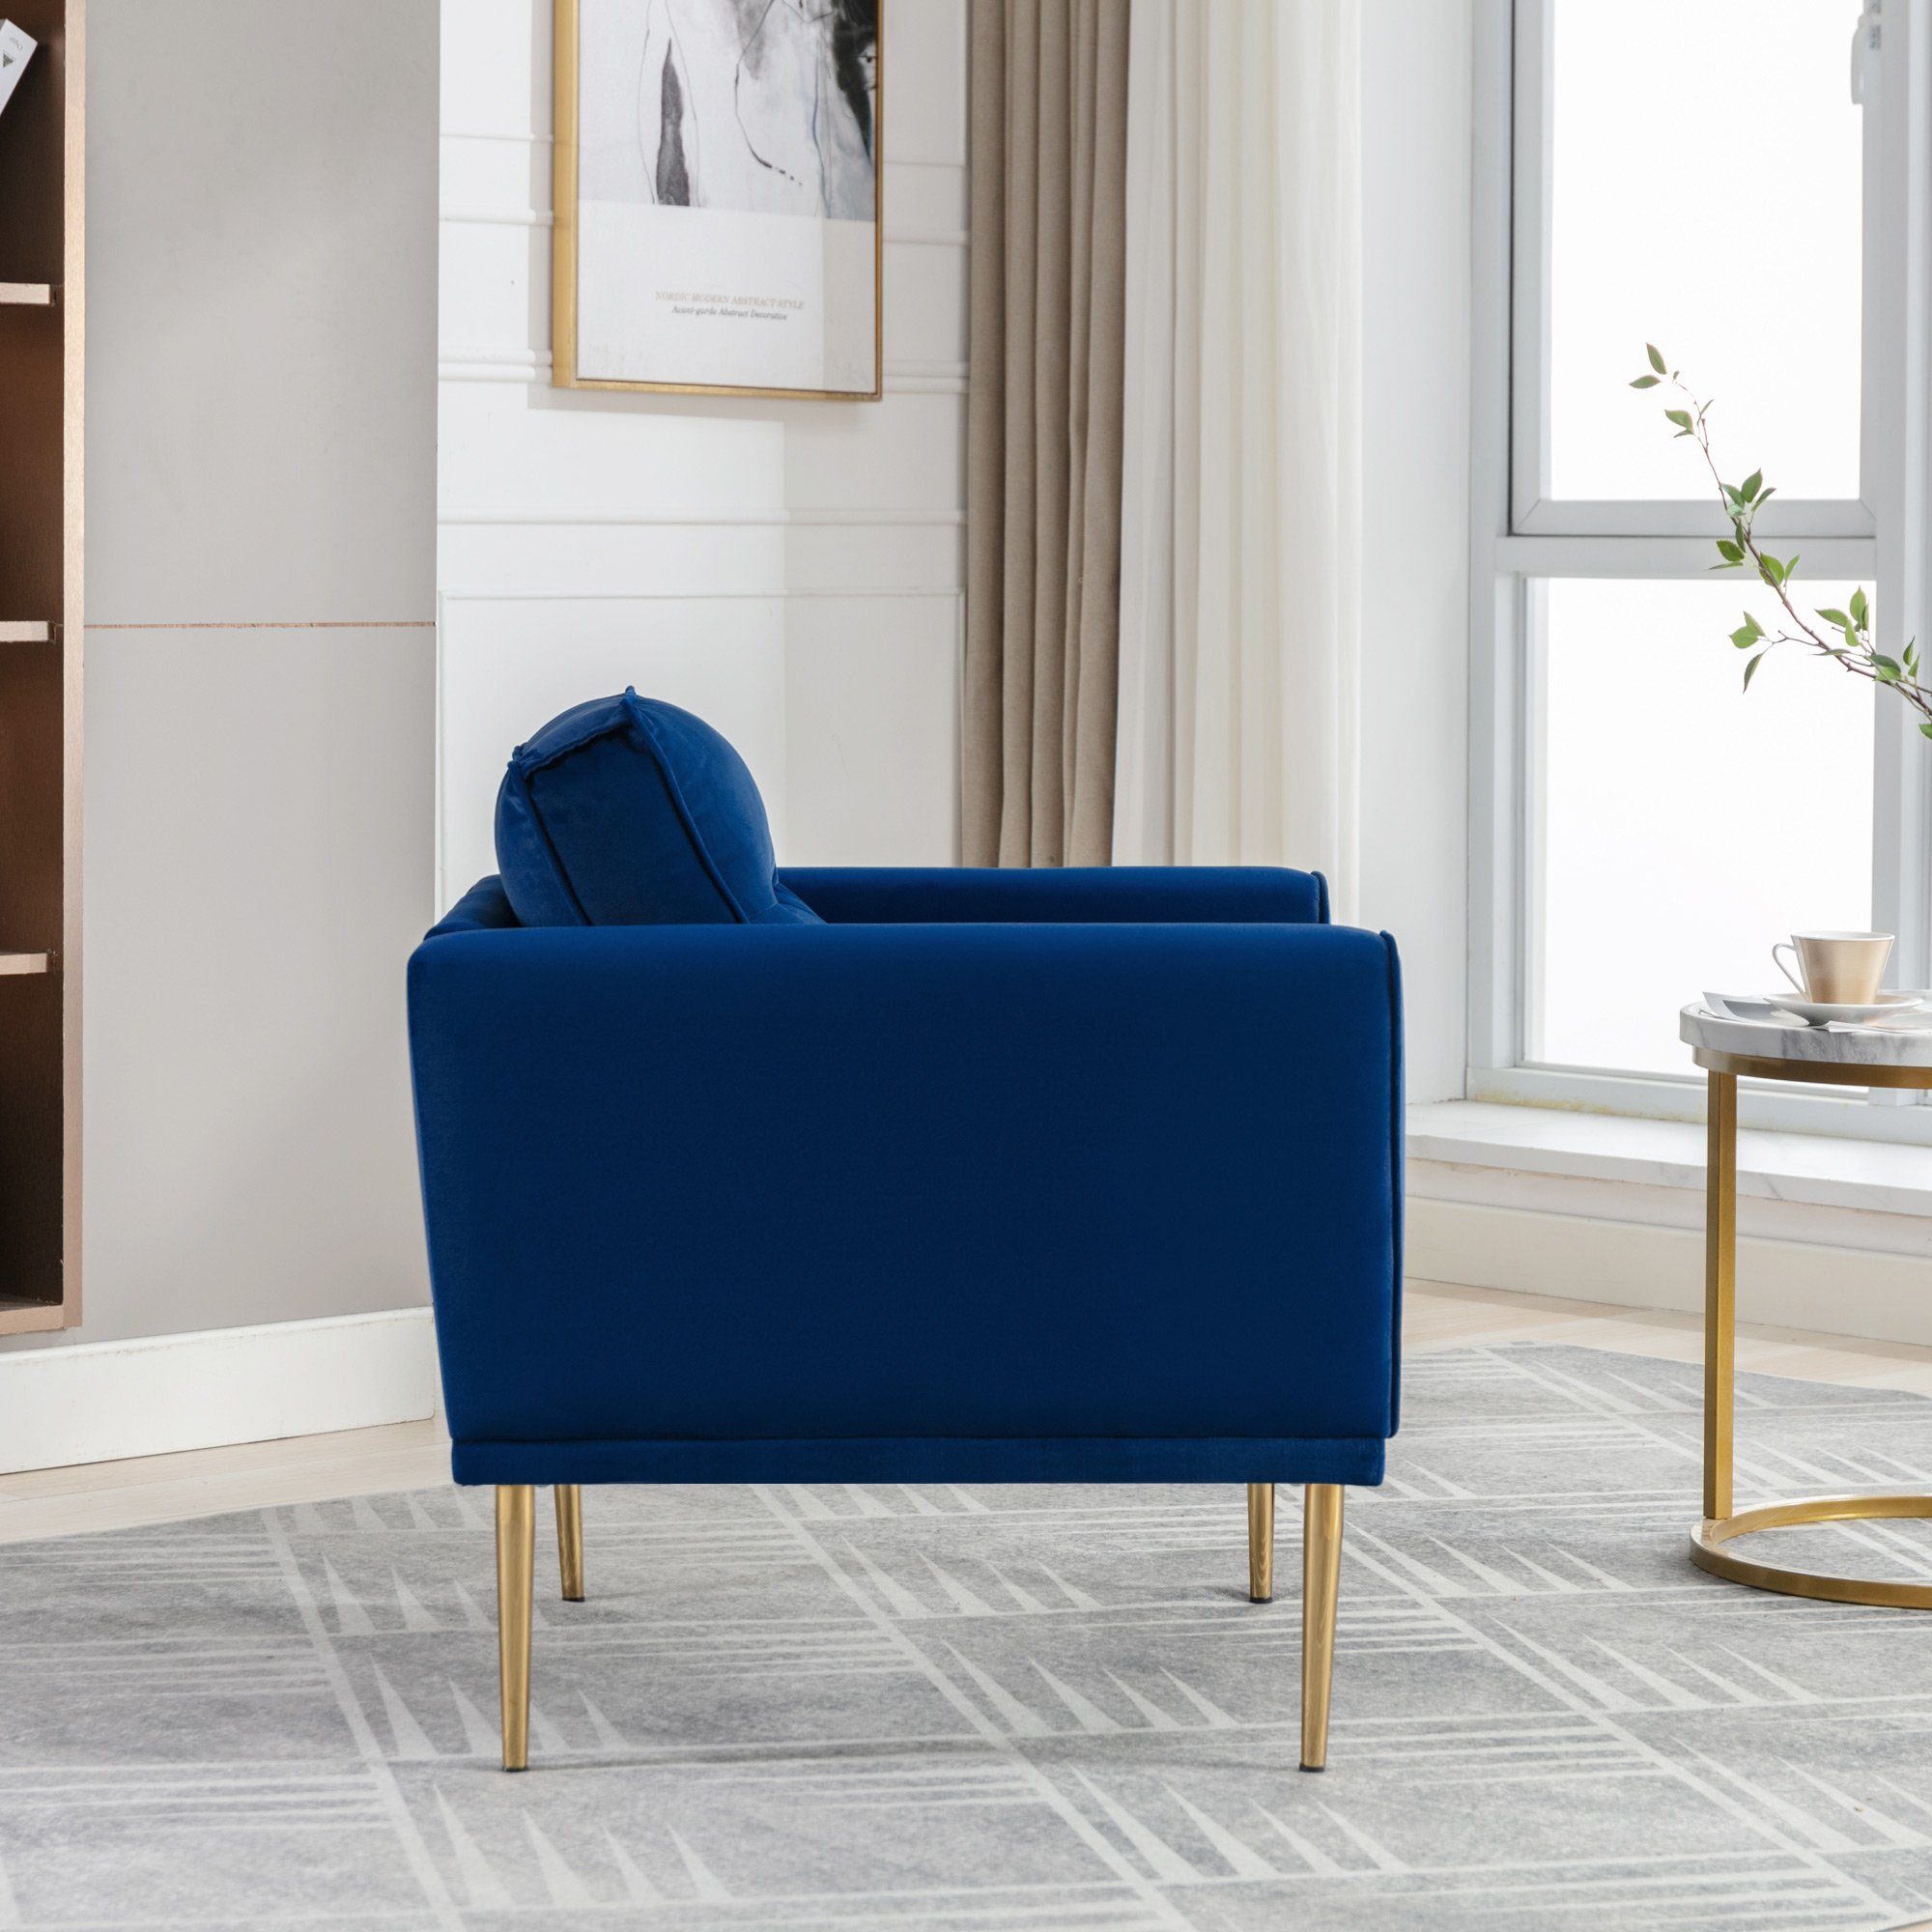 WISHDOR Sessel Relaxsessel, Relaxstuhl, Fernsehsessel, Samtstuhl (Sessel Sitzkissen), einfacher mit Polster Loungesessel, blau und lässiger moderner Sessel